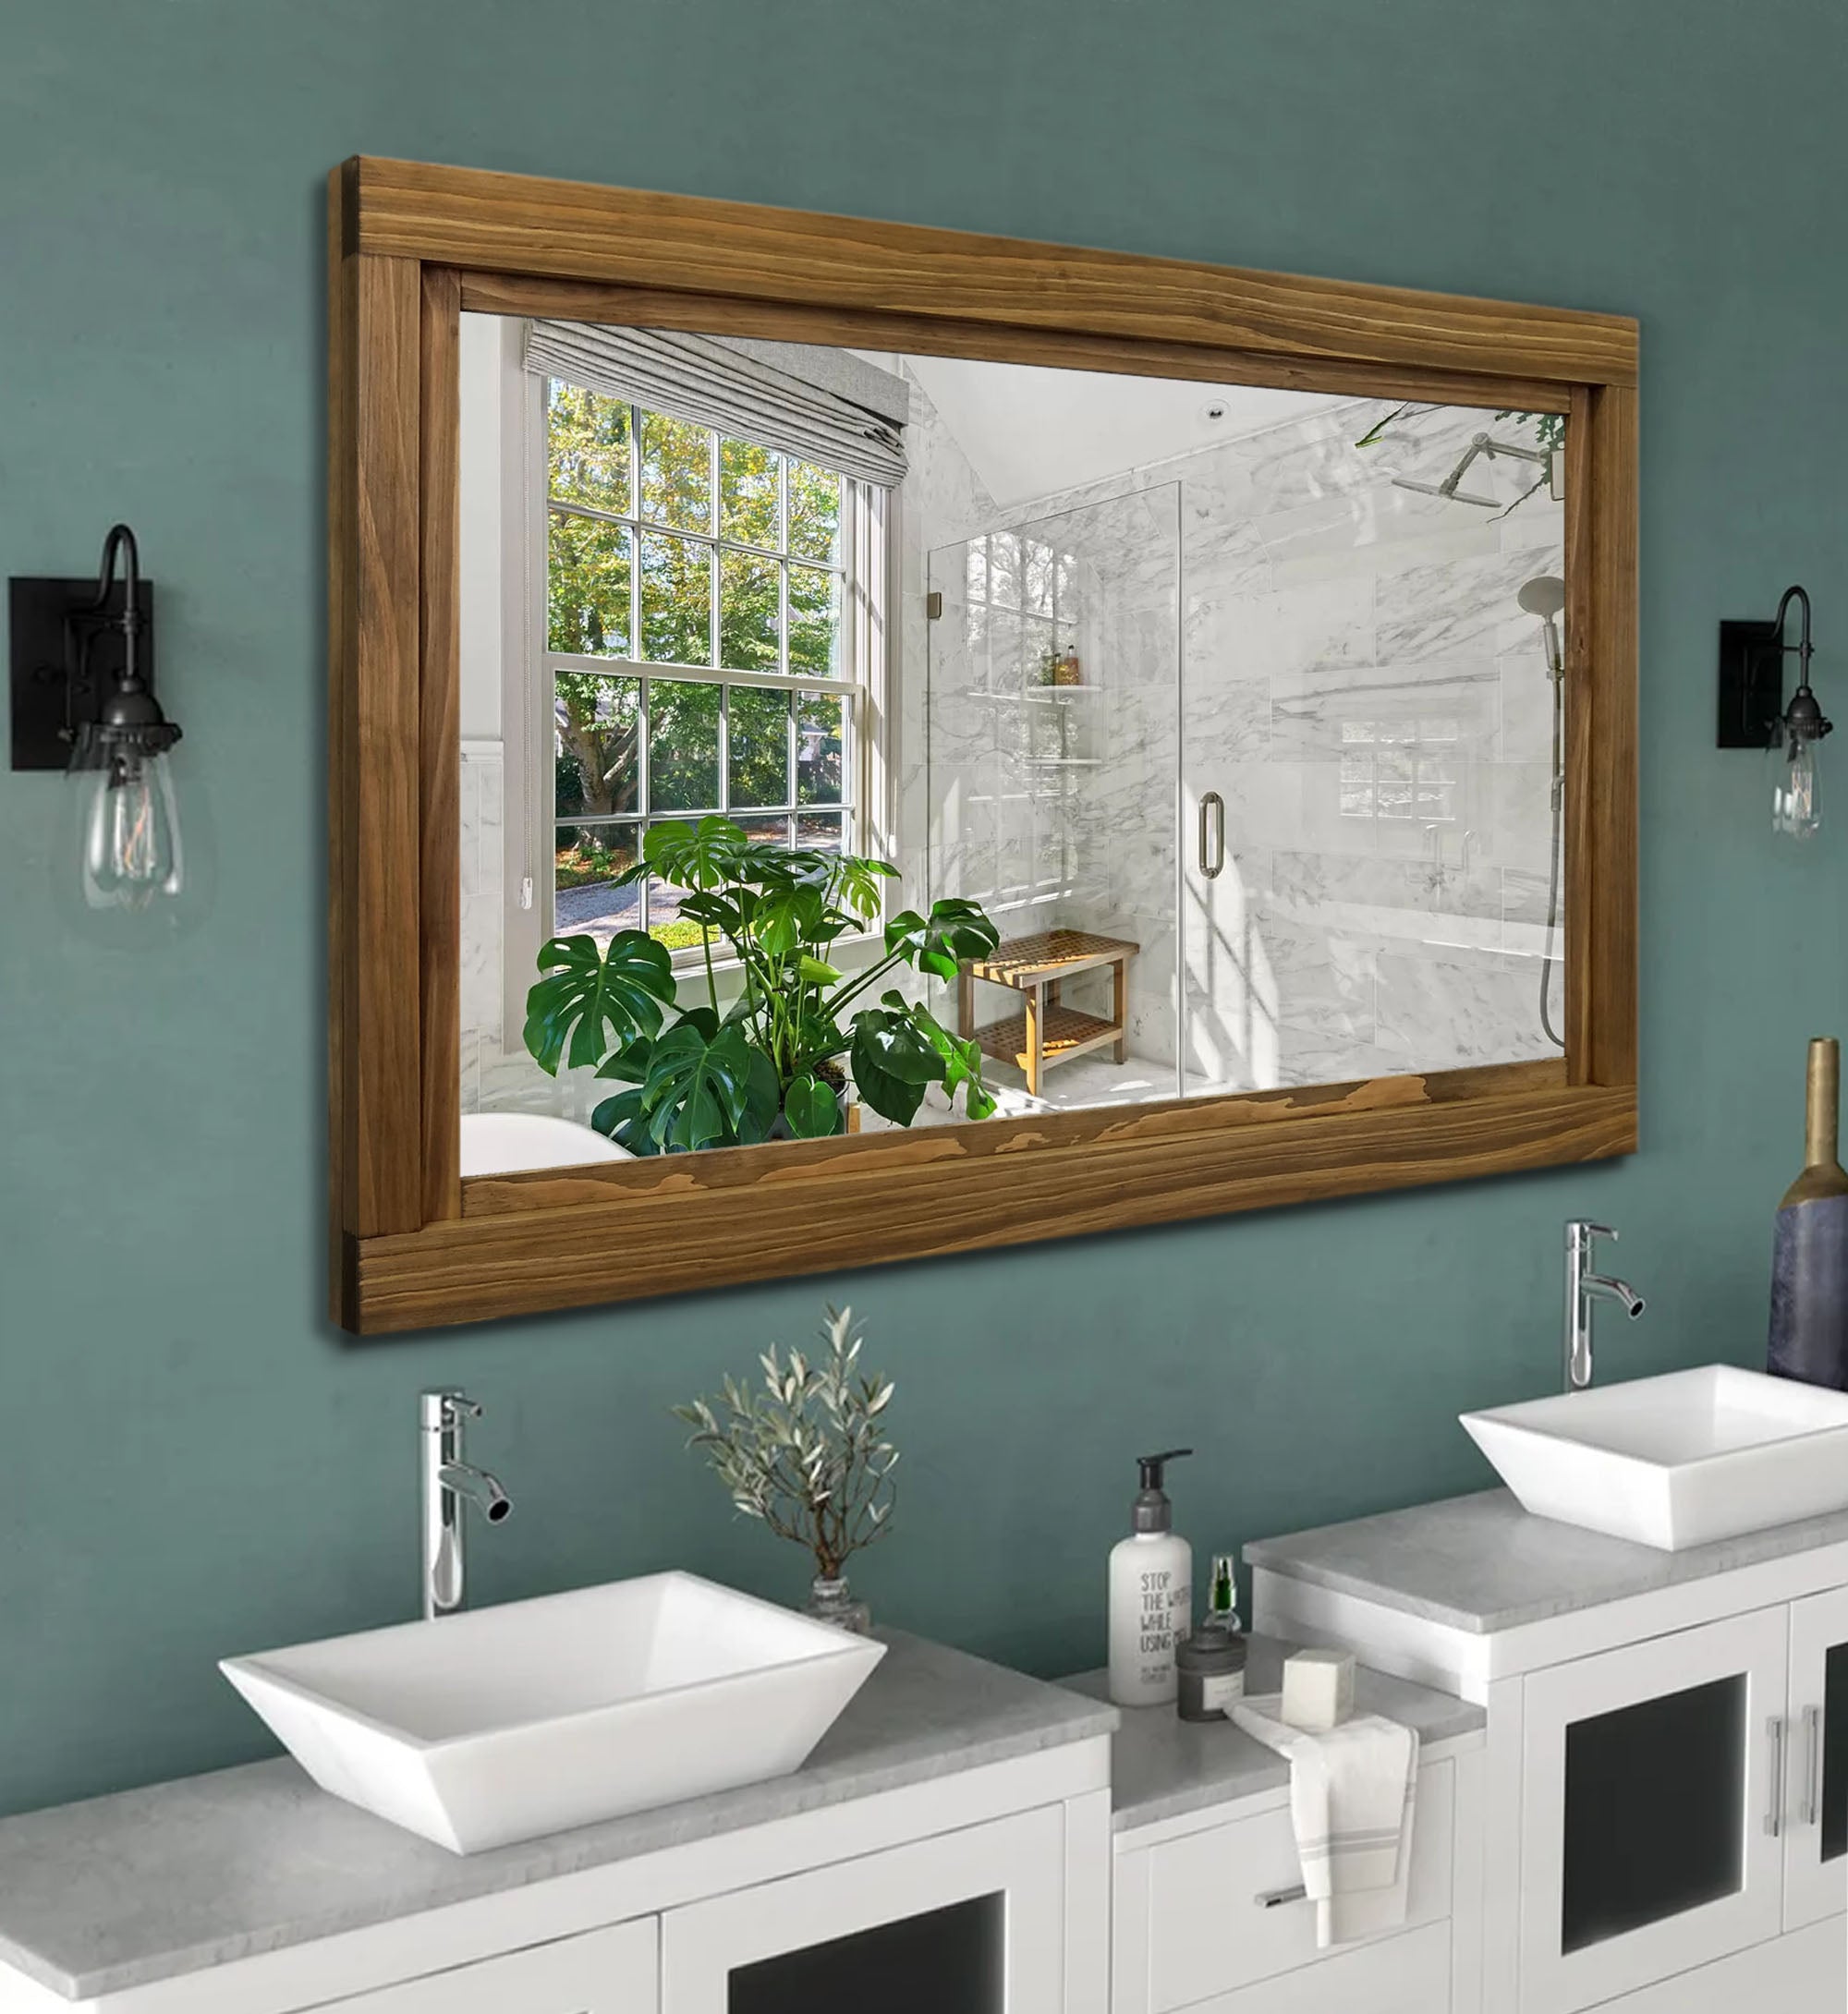 Farmhouse Wood Framed Wall Mirror, Shown in Driftwood